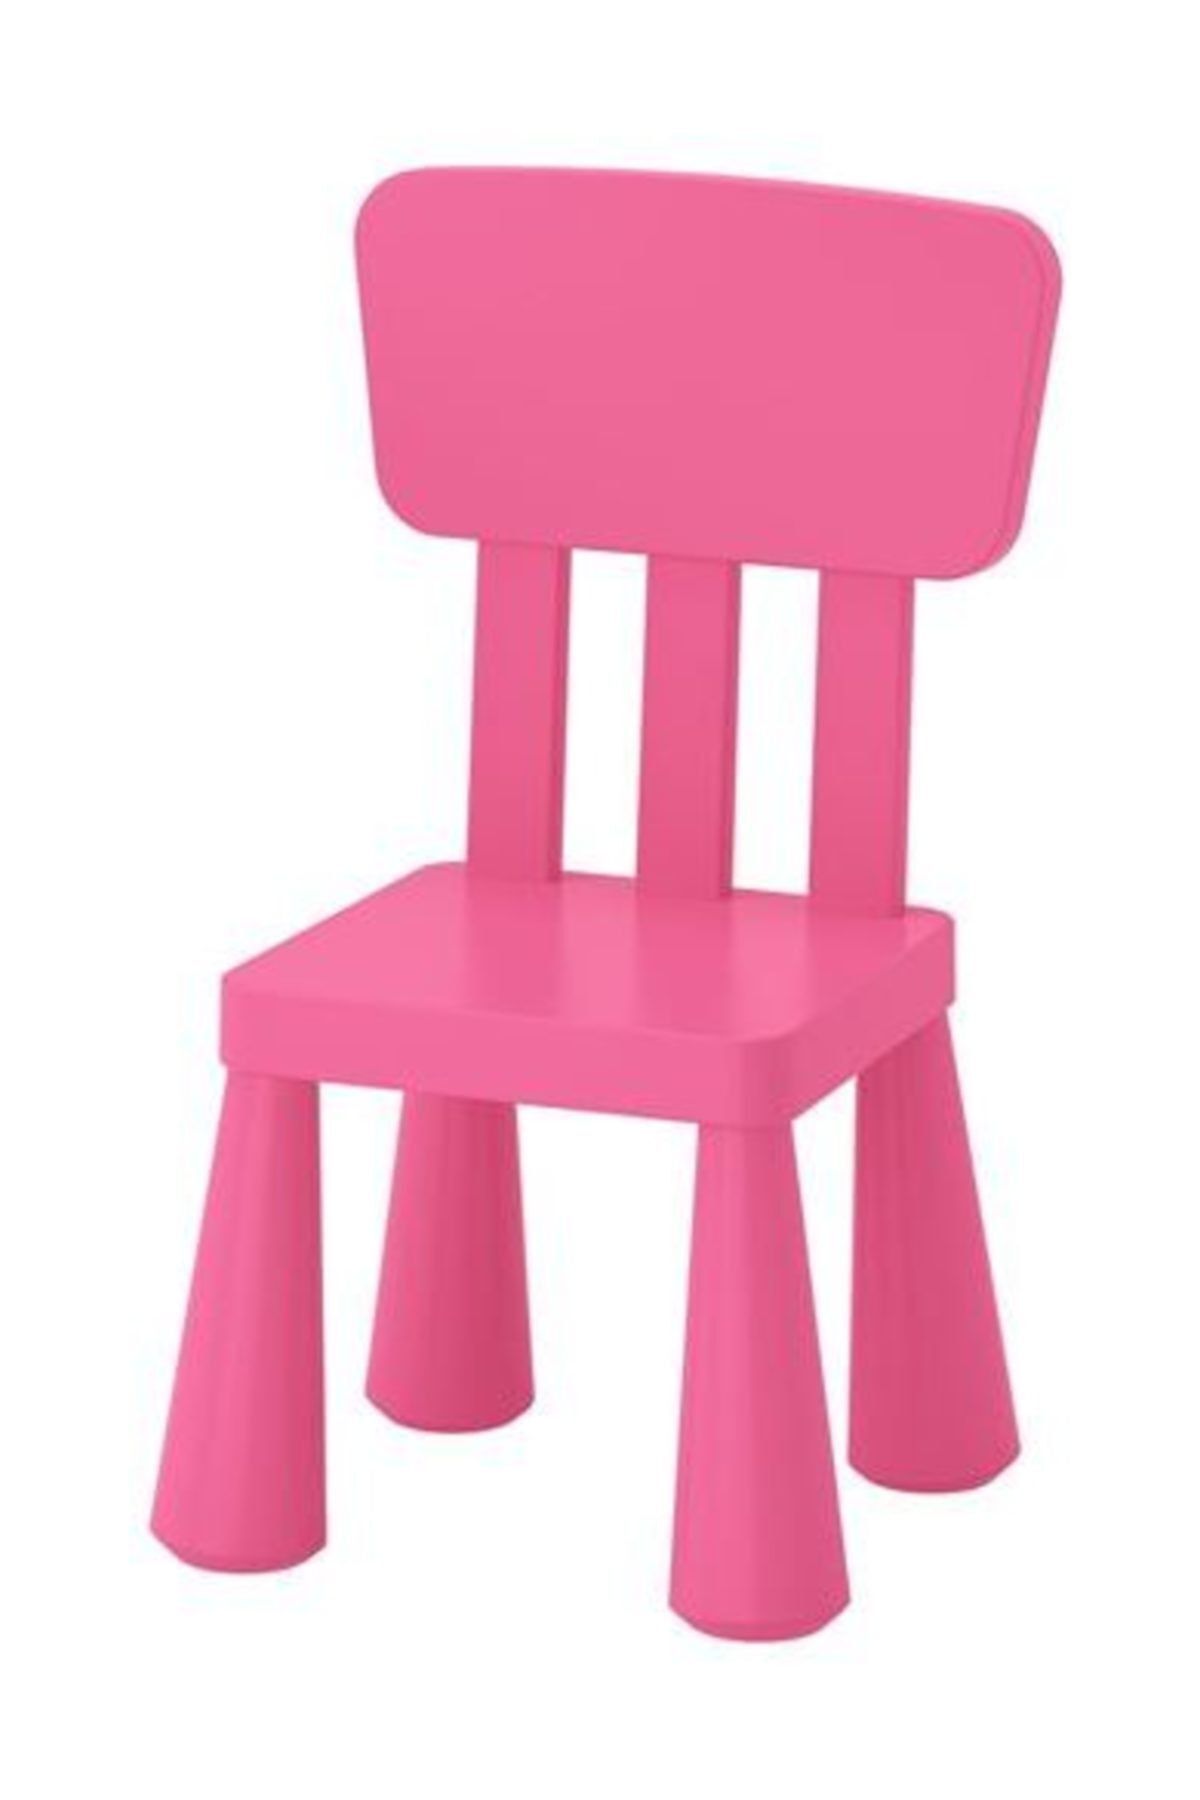 IKEA - Mammut Çocuk Sandalyesi - Pembe